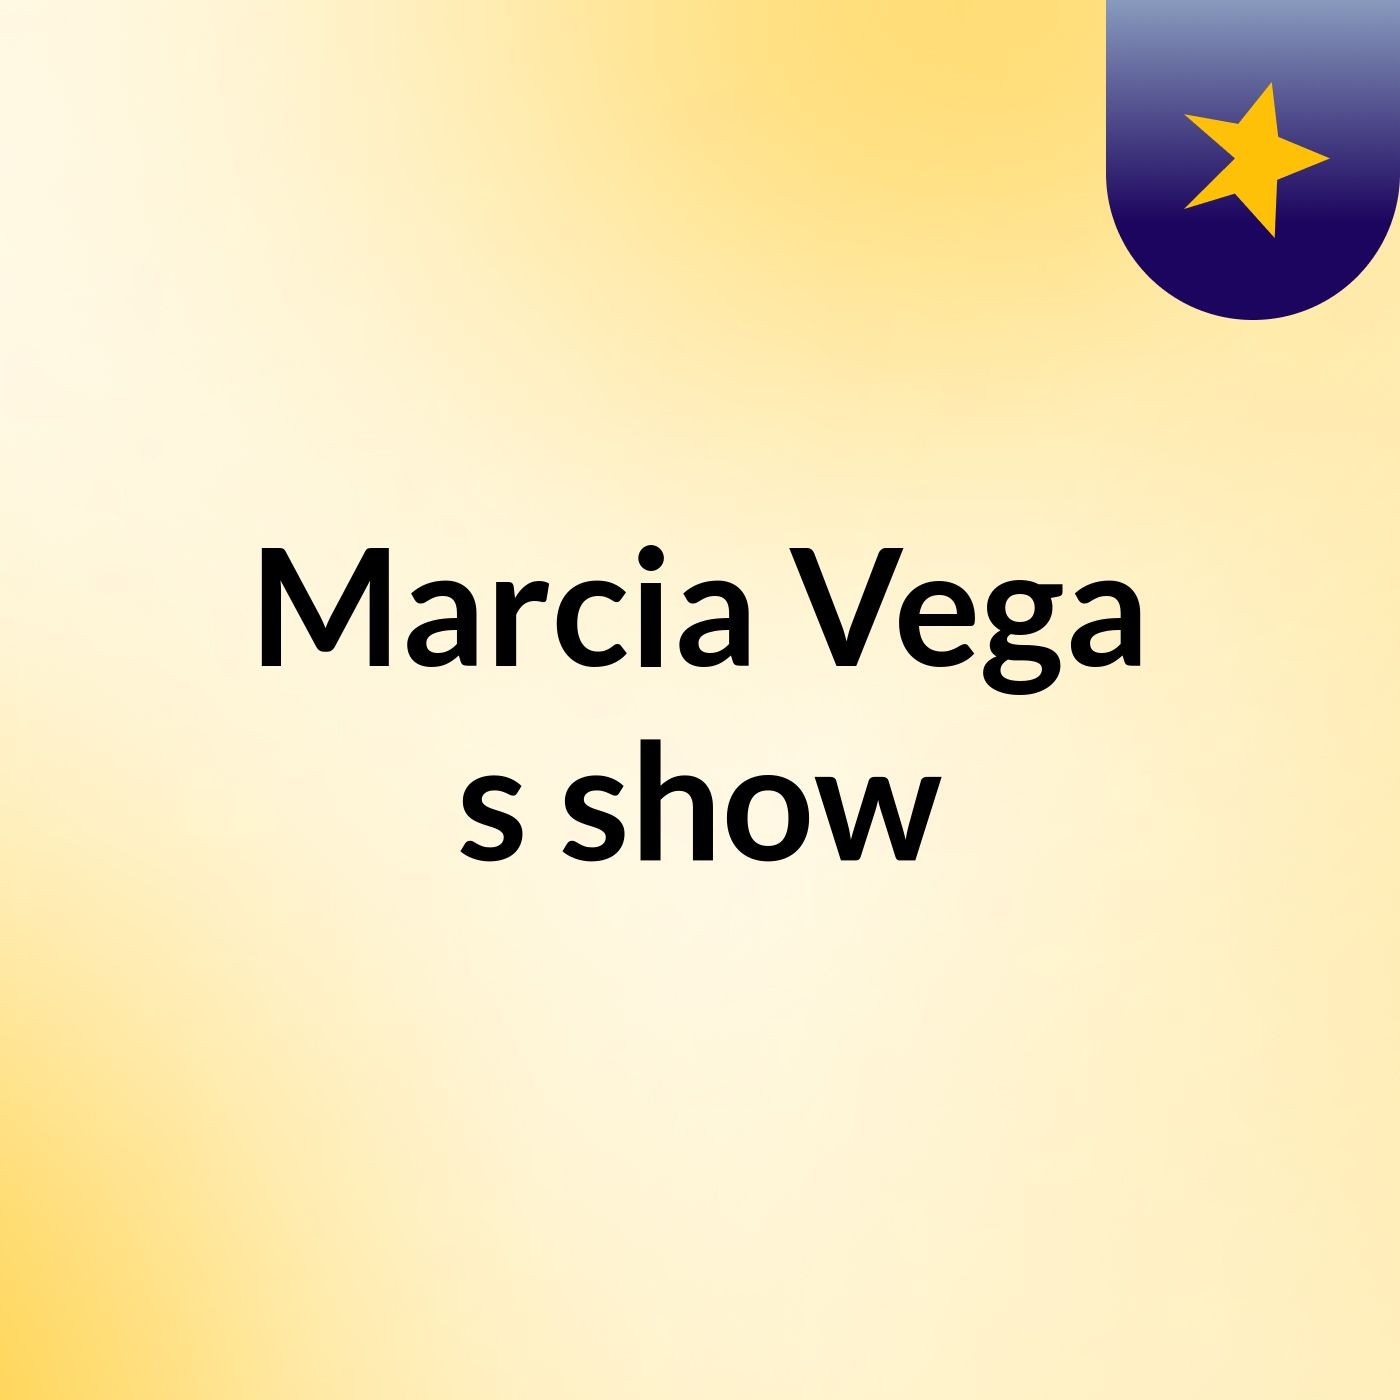 Marcia Vega's show